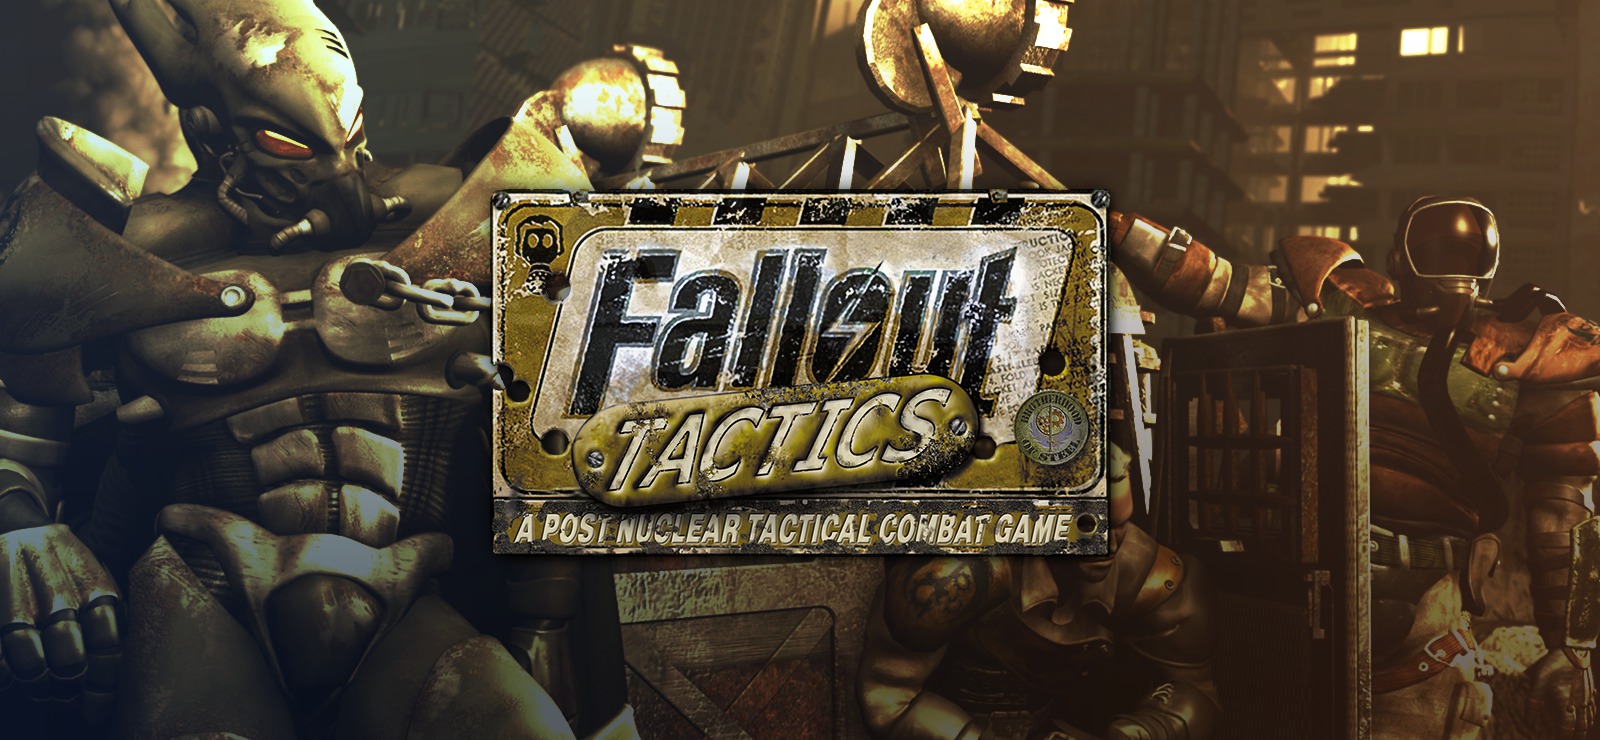 download Fallout Tactics: Brotherhood of Steel free